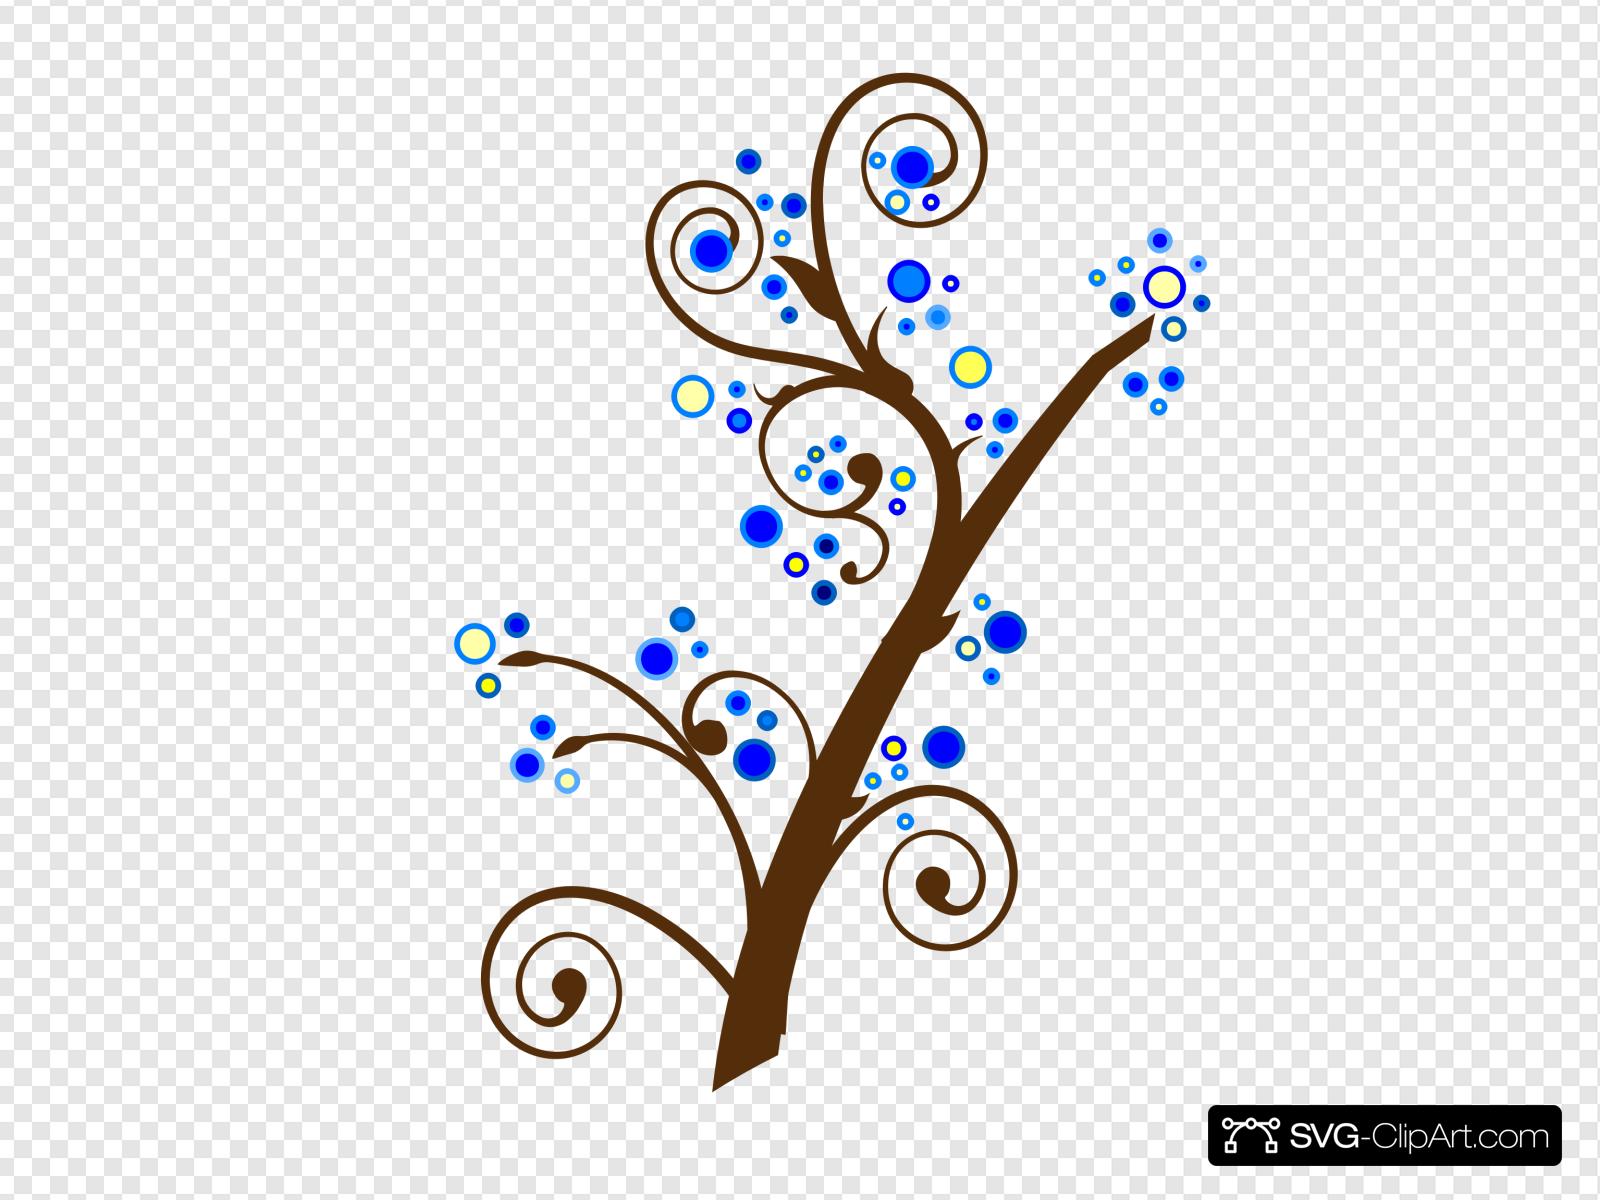 Branch clipart svg. Brown tree clip art